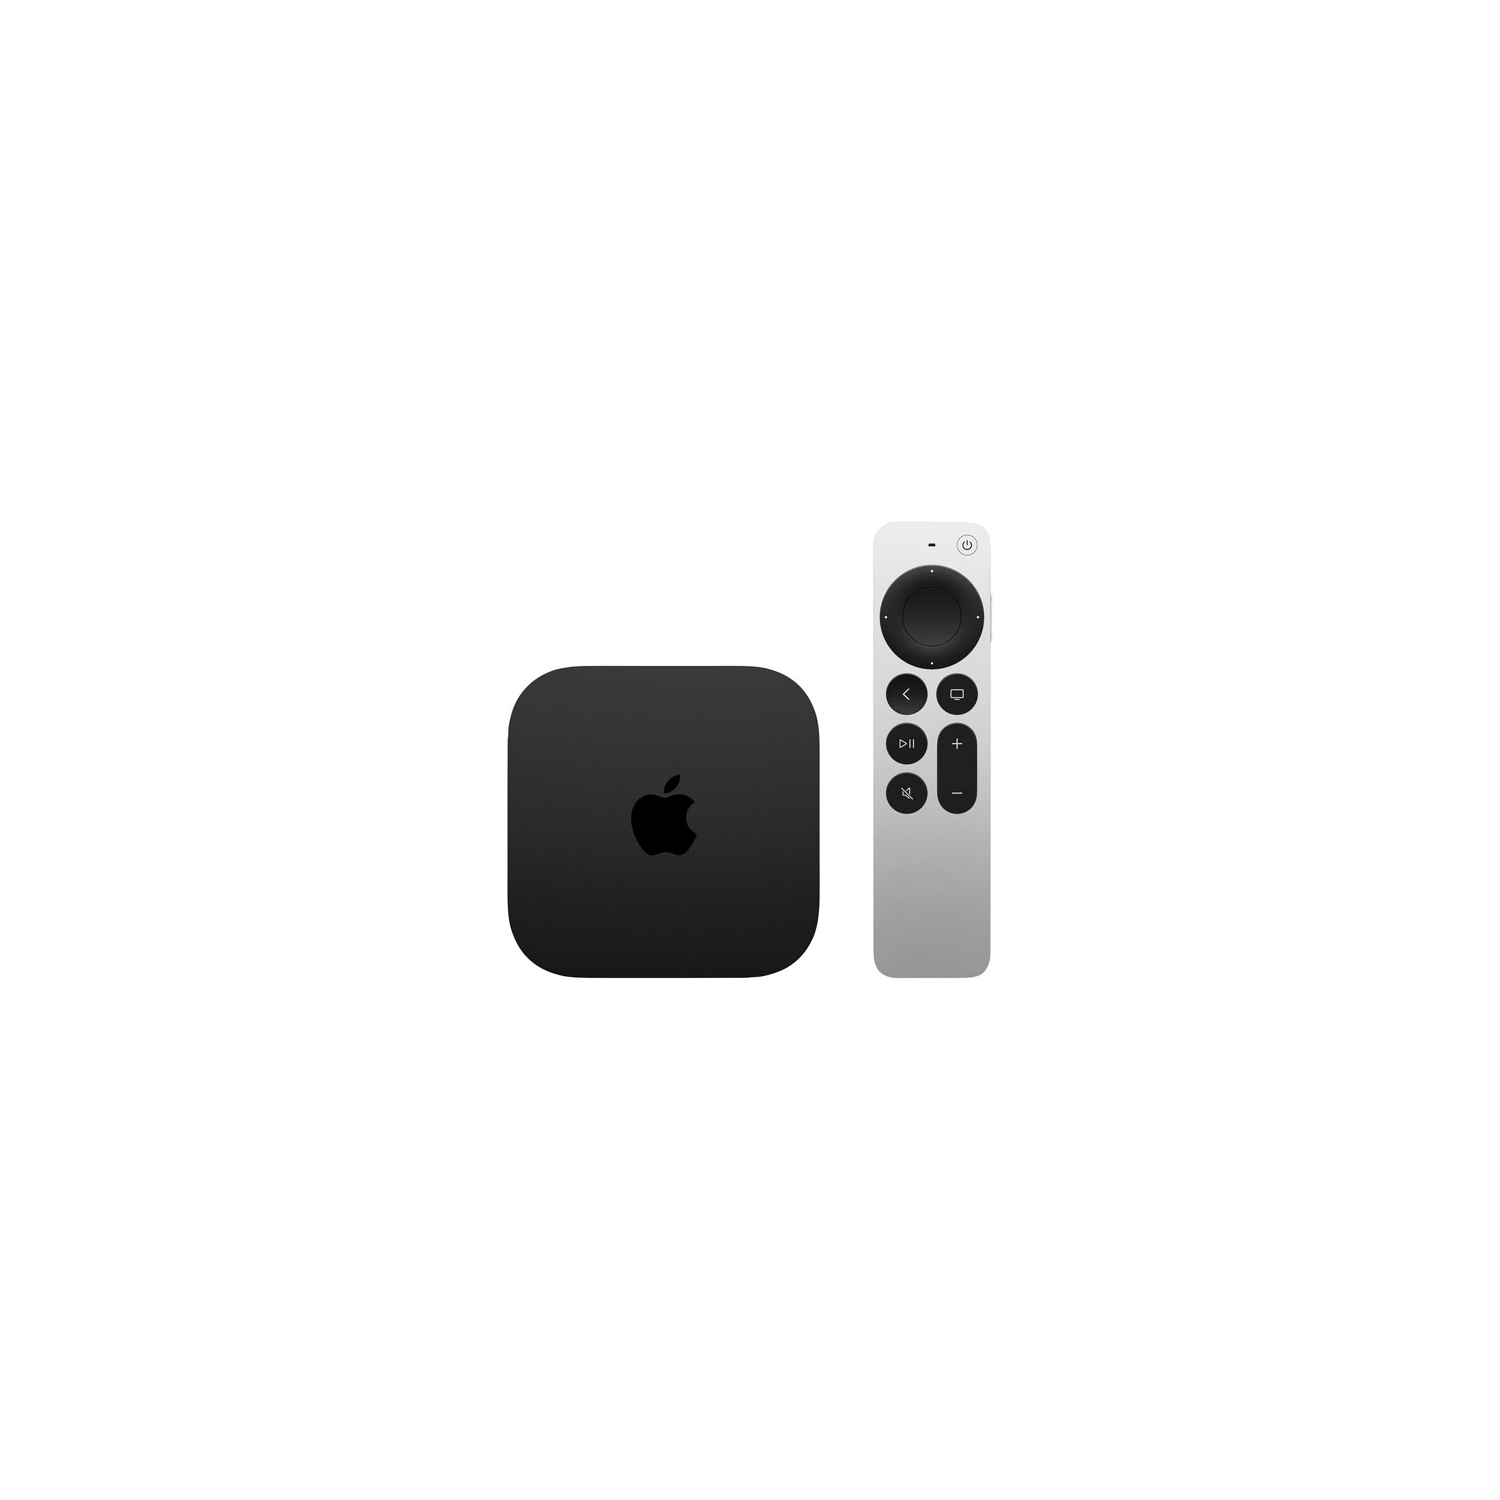 Refurbished (Good) - Apple TV 4K 128GB with Wi-Fi & Ethernet (3rd Generation)